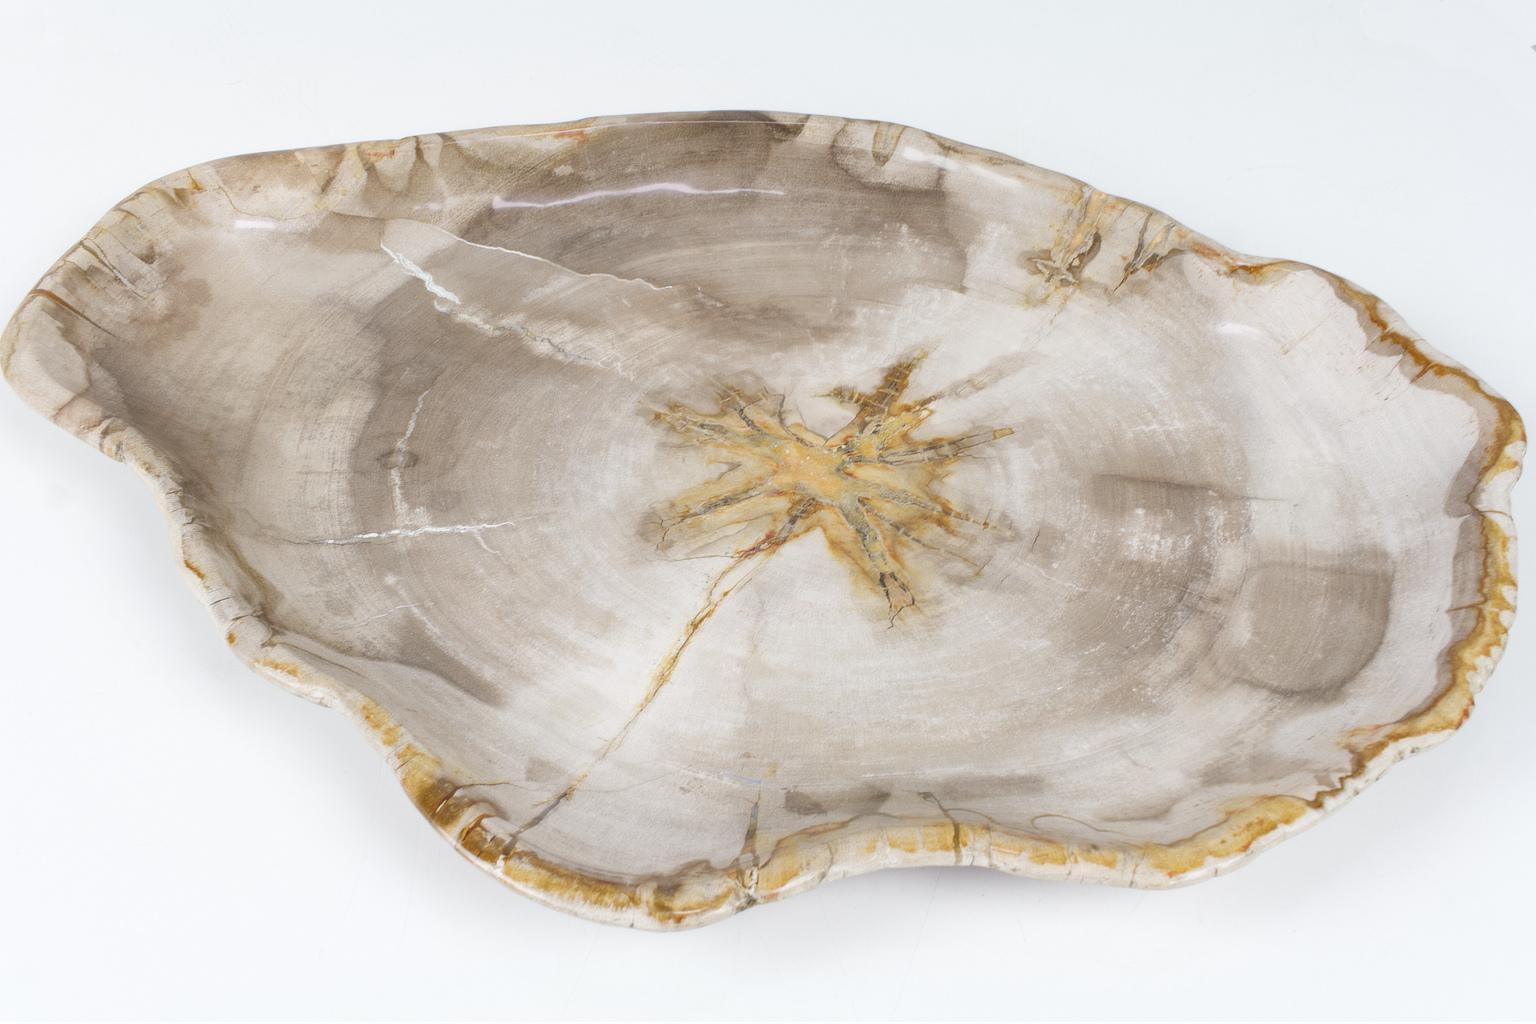 Organic Modern Large Petrified Wooden Plate in Beige Tones, Object Organic Origin